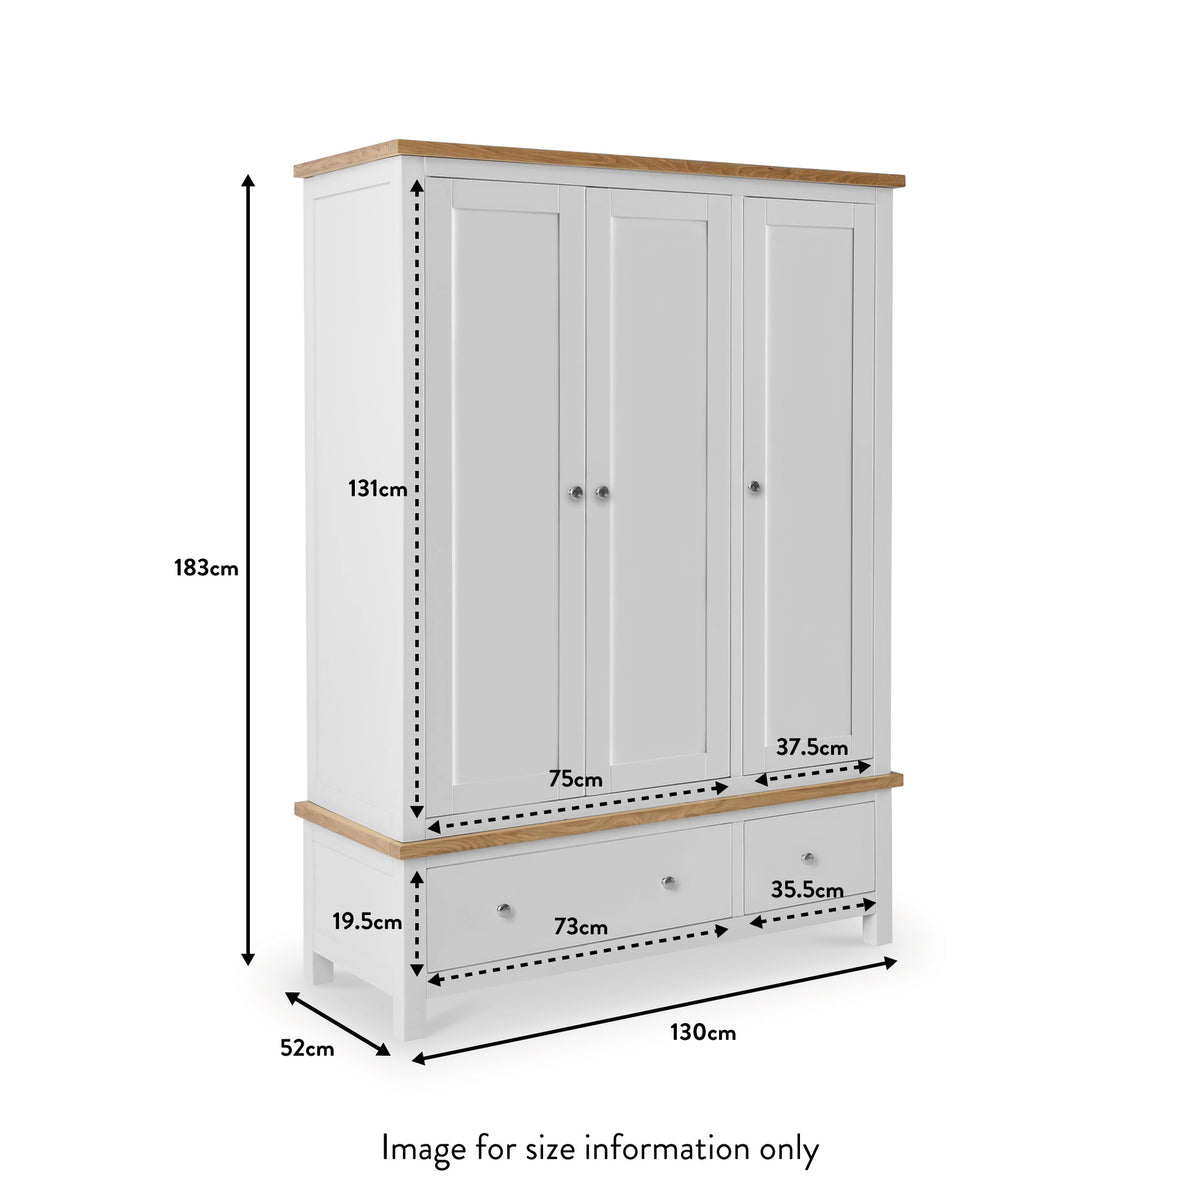 Farrow Triple Wardrobe with Storage Drawers dimensions